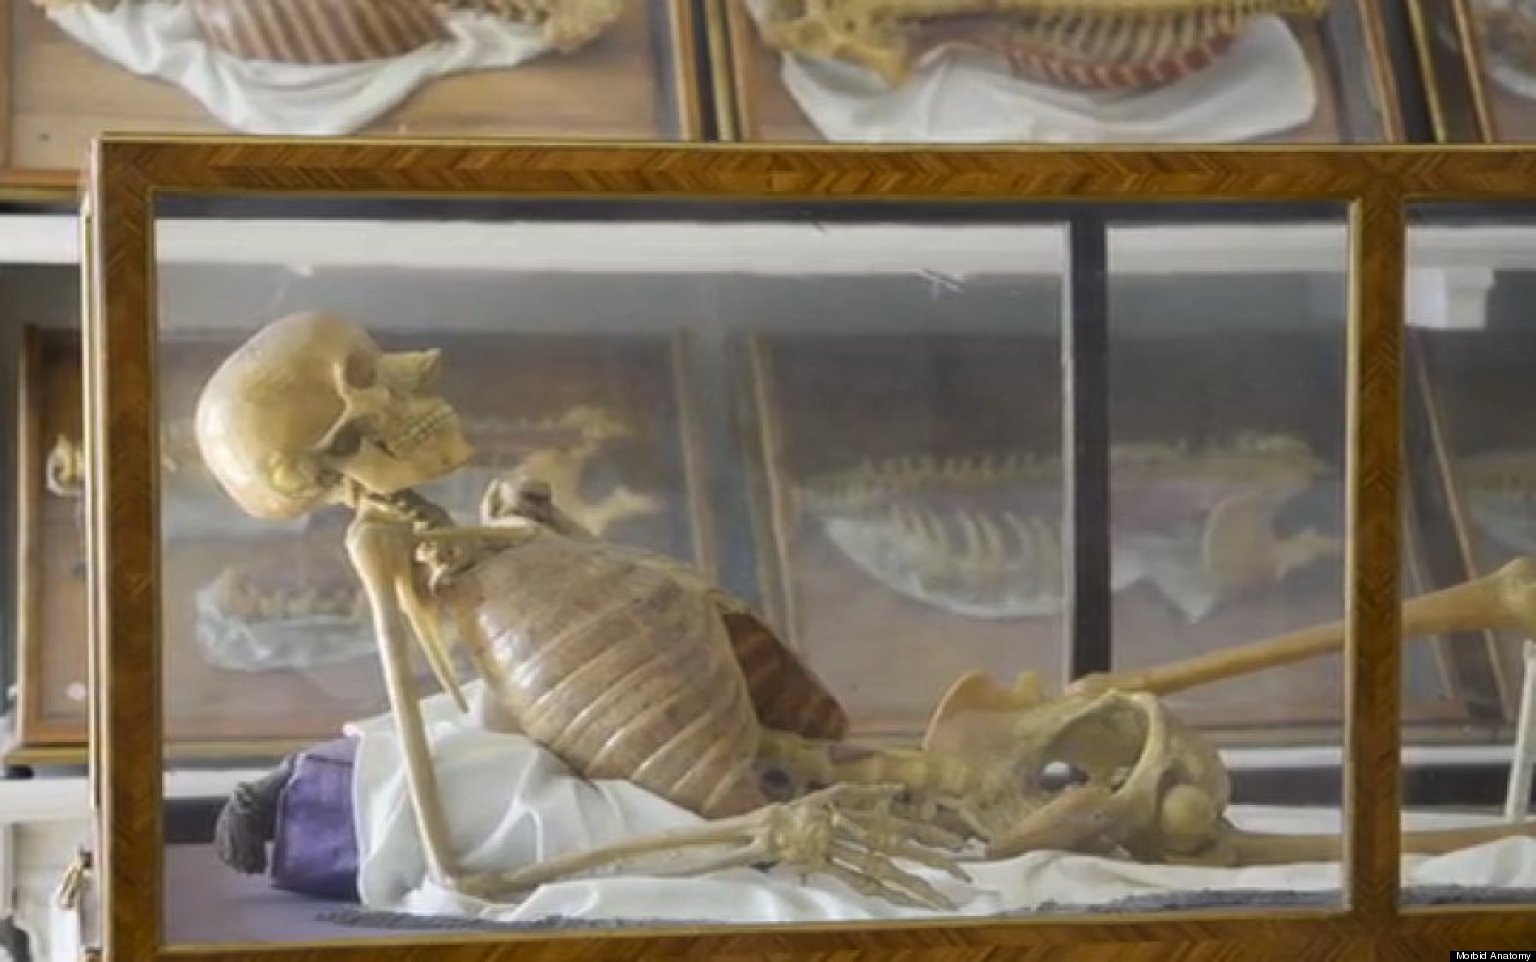 'Morbid Anatomy Anthology': Brooklyn Art Group Seeks Funding For